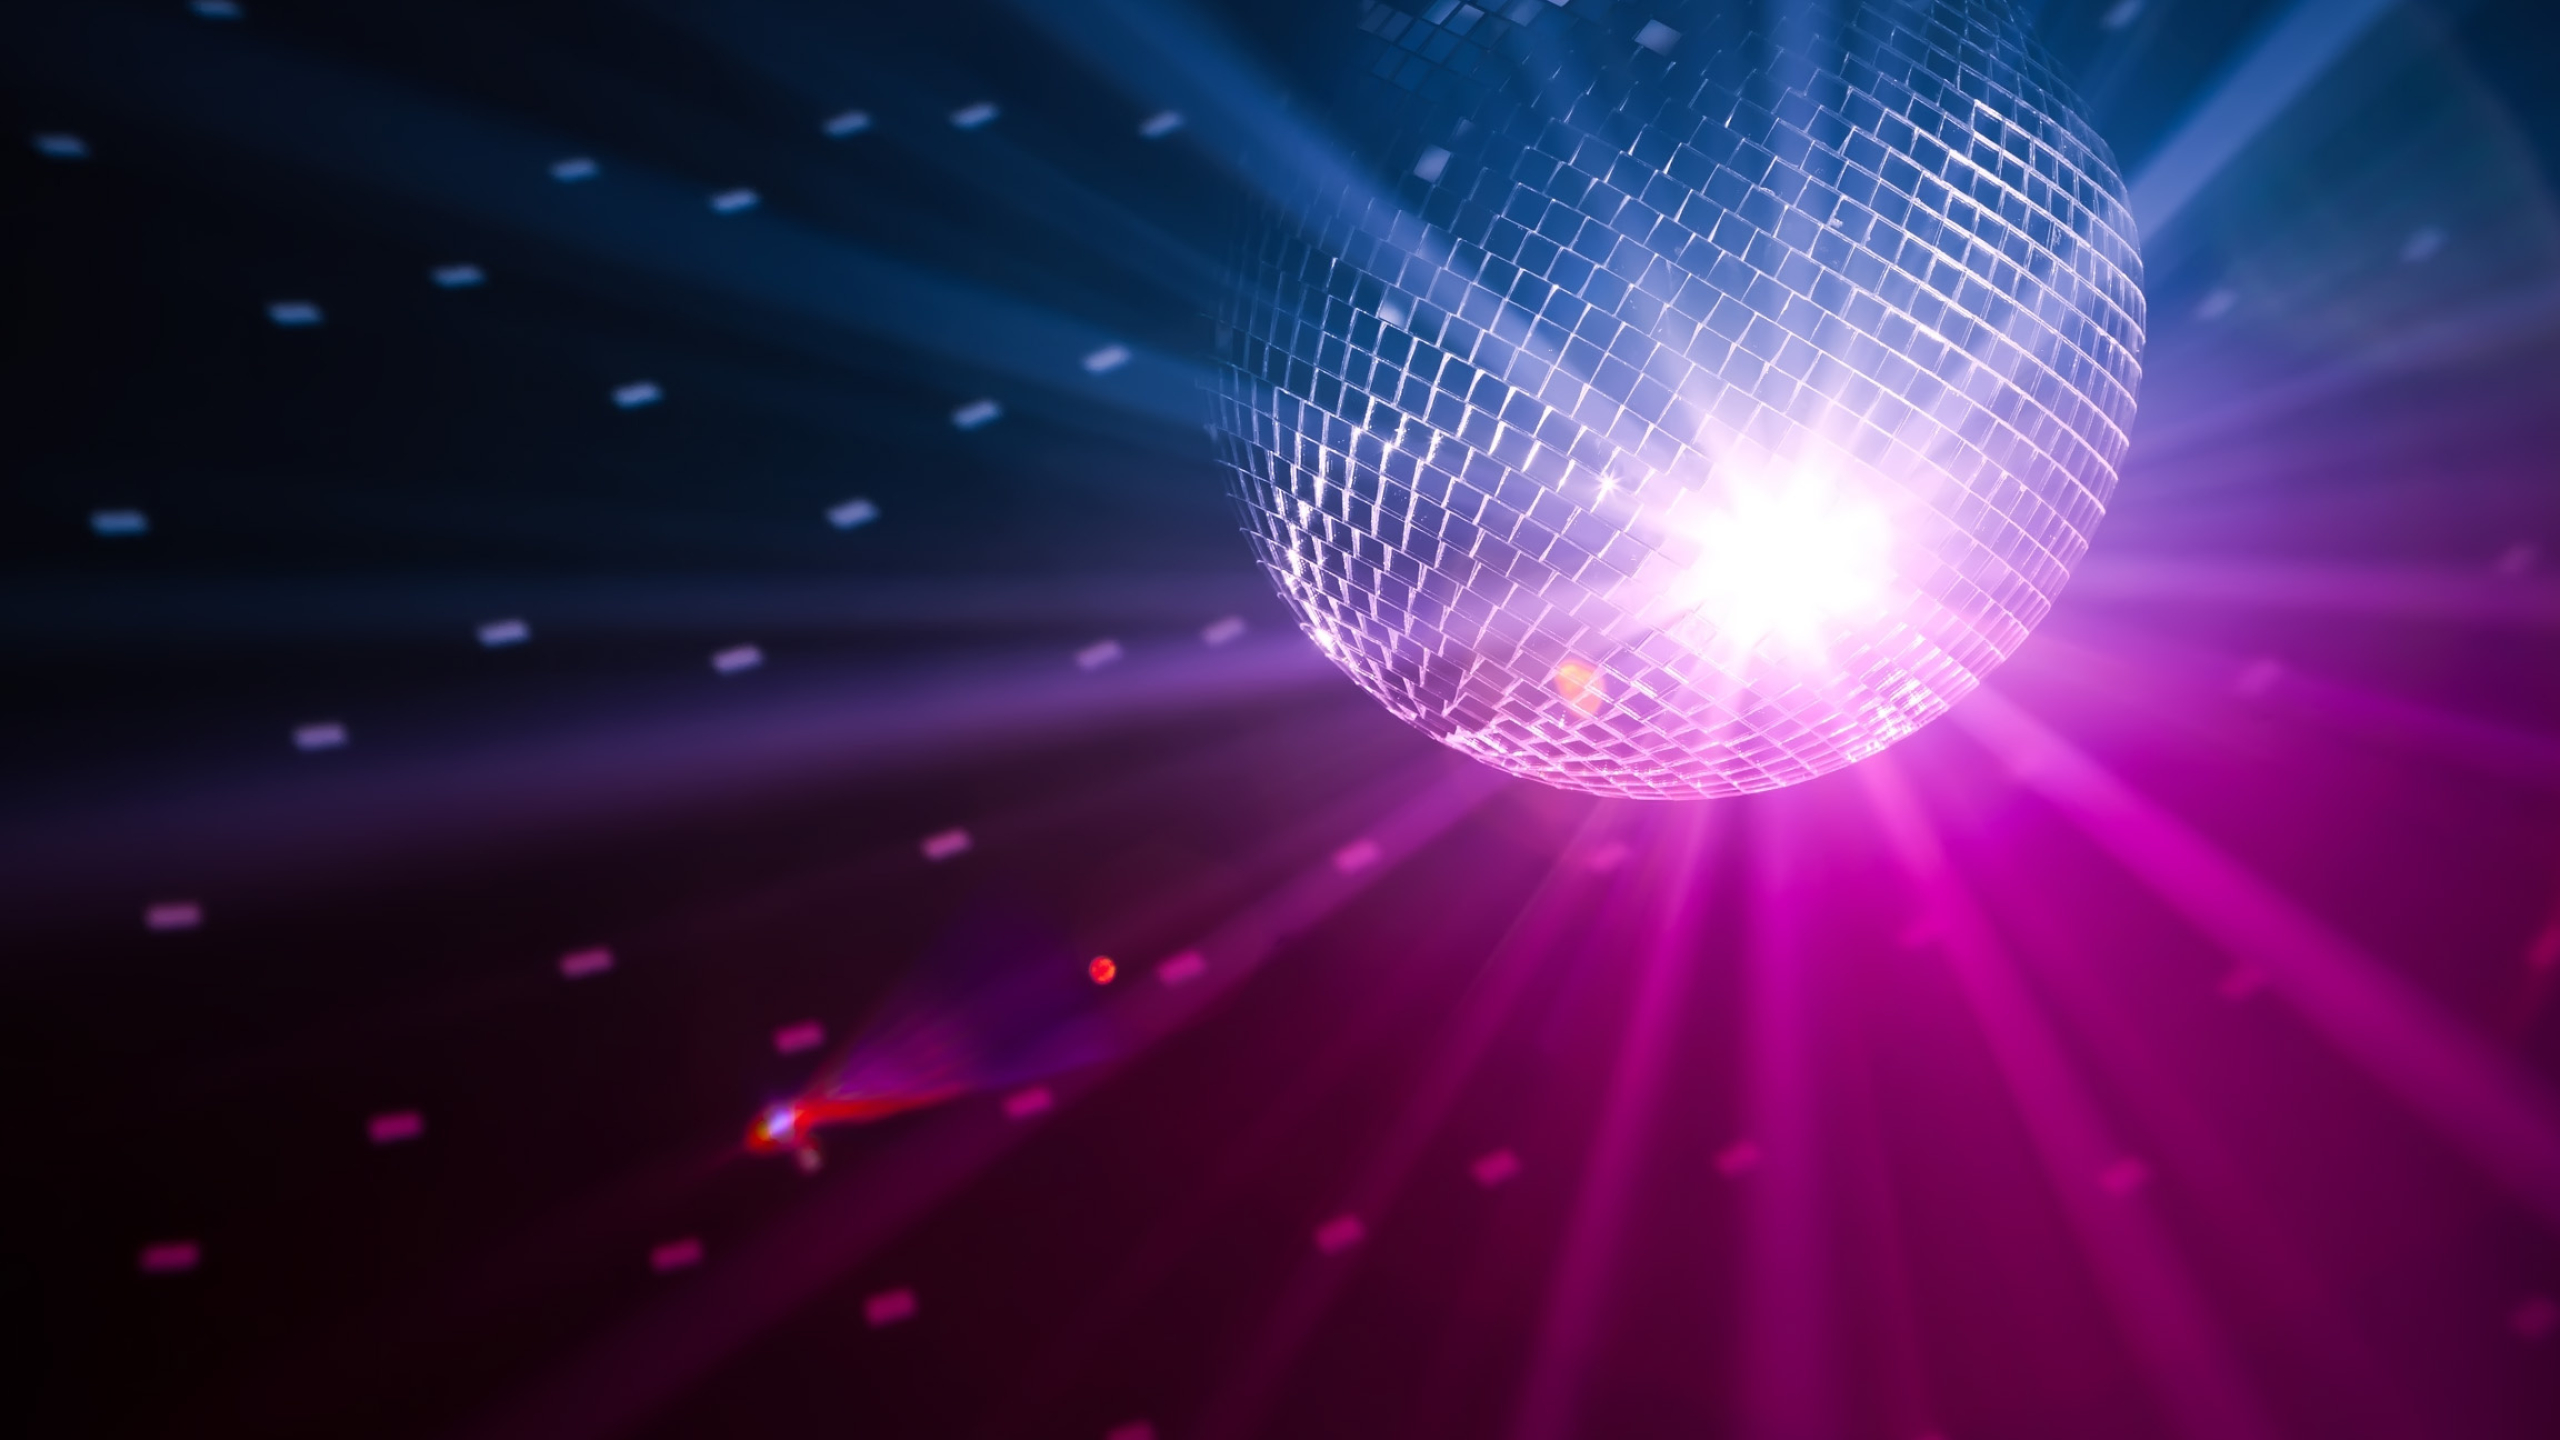 Discotheque: Rainbow glittering mirror ball, Casting moving spots of light, Nightclub. 2560x1440 HD Background.